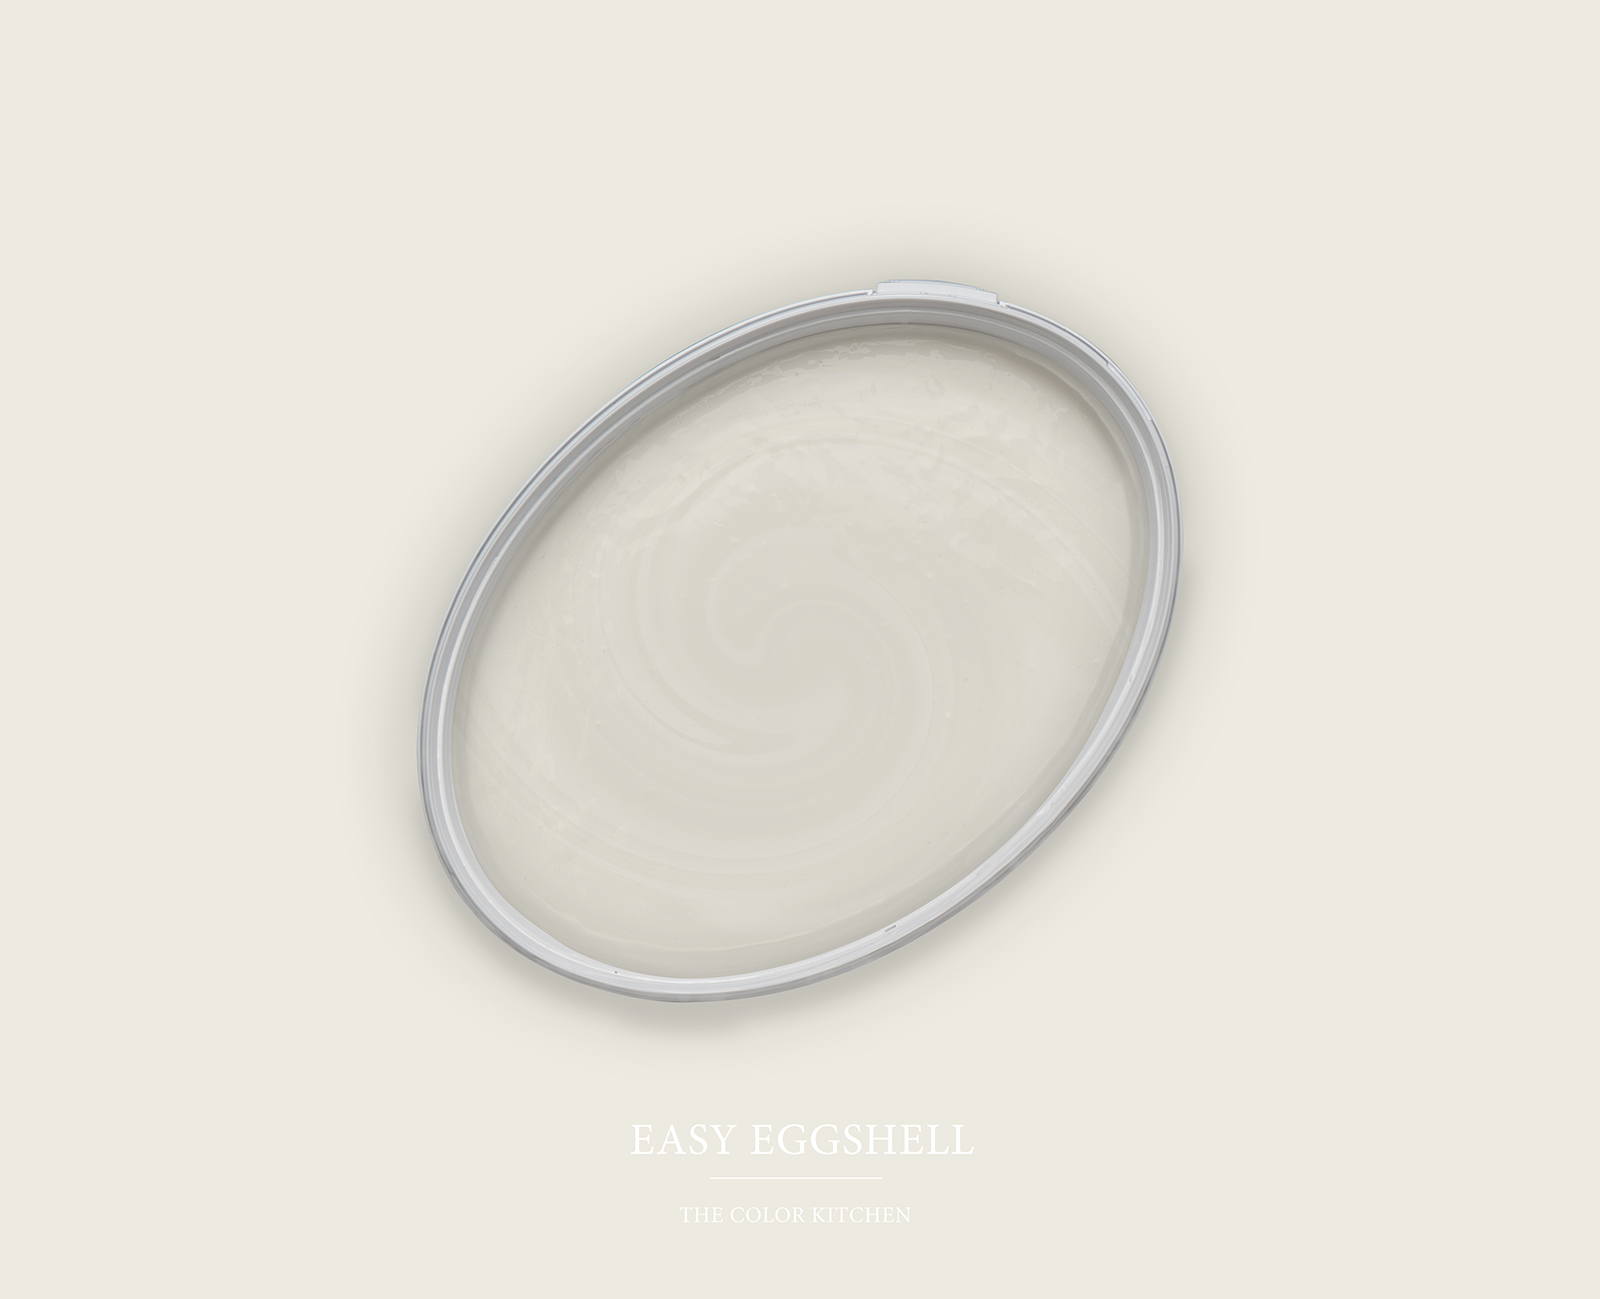         Wall Paint TCK1001 »Easy Eggshell« in soothing eggshell – 2.5 litre
    